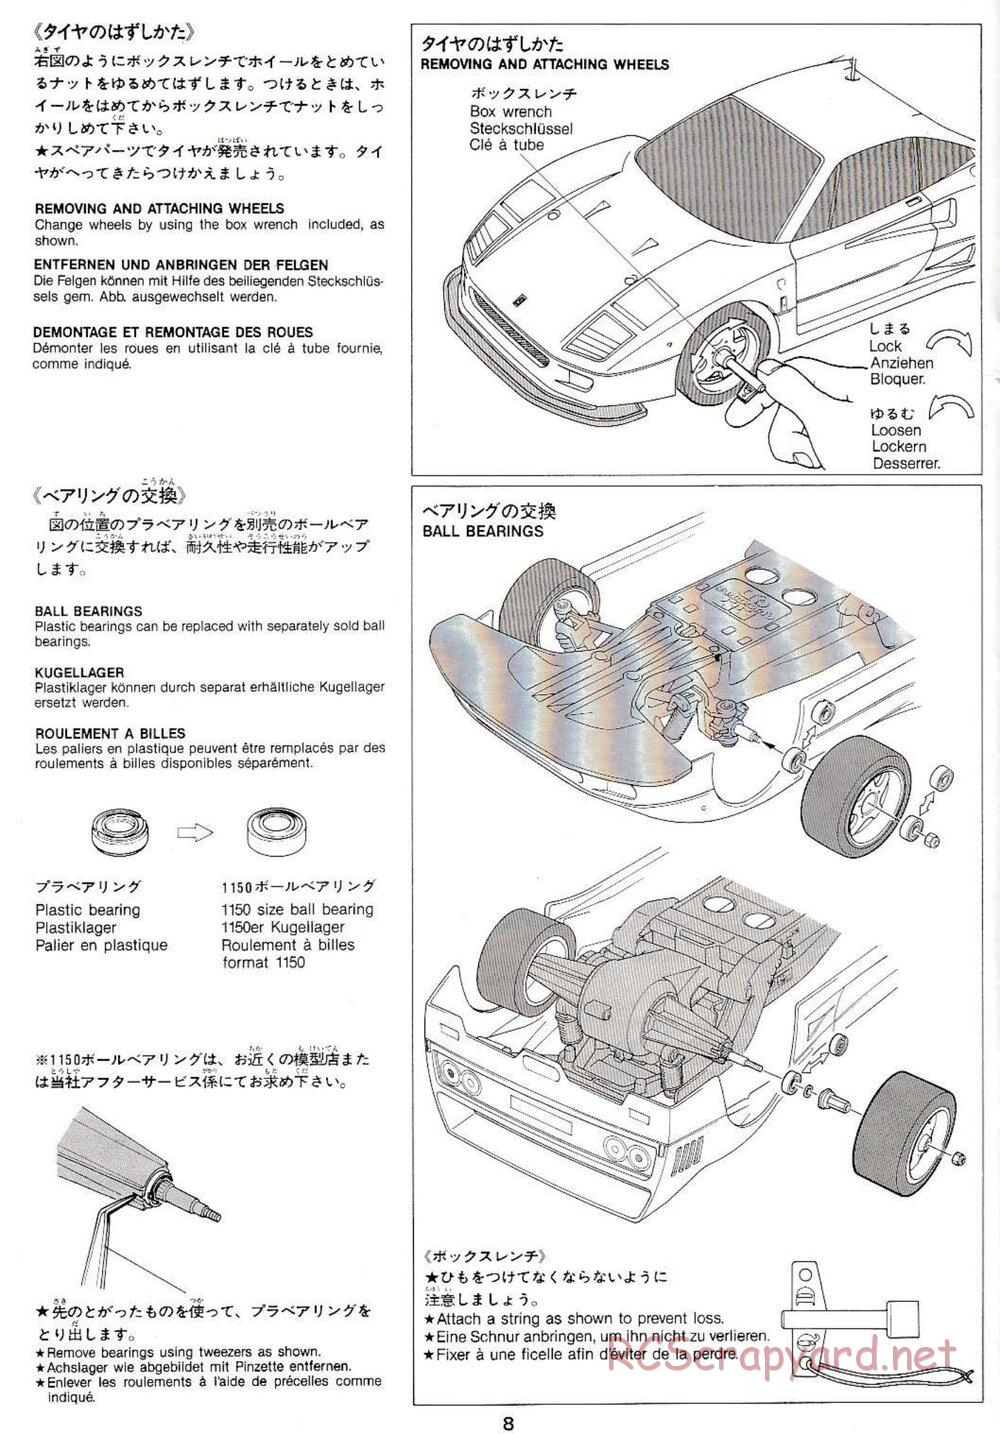 Tamiya - Ferrari F40 QD Chassis - Manual - Page 8